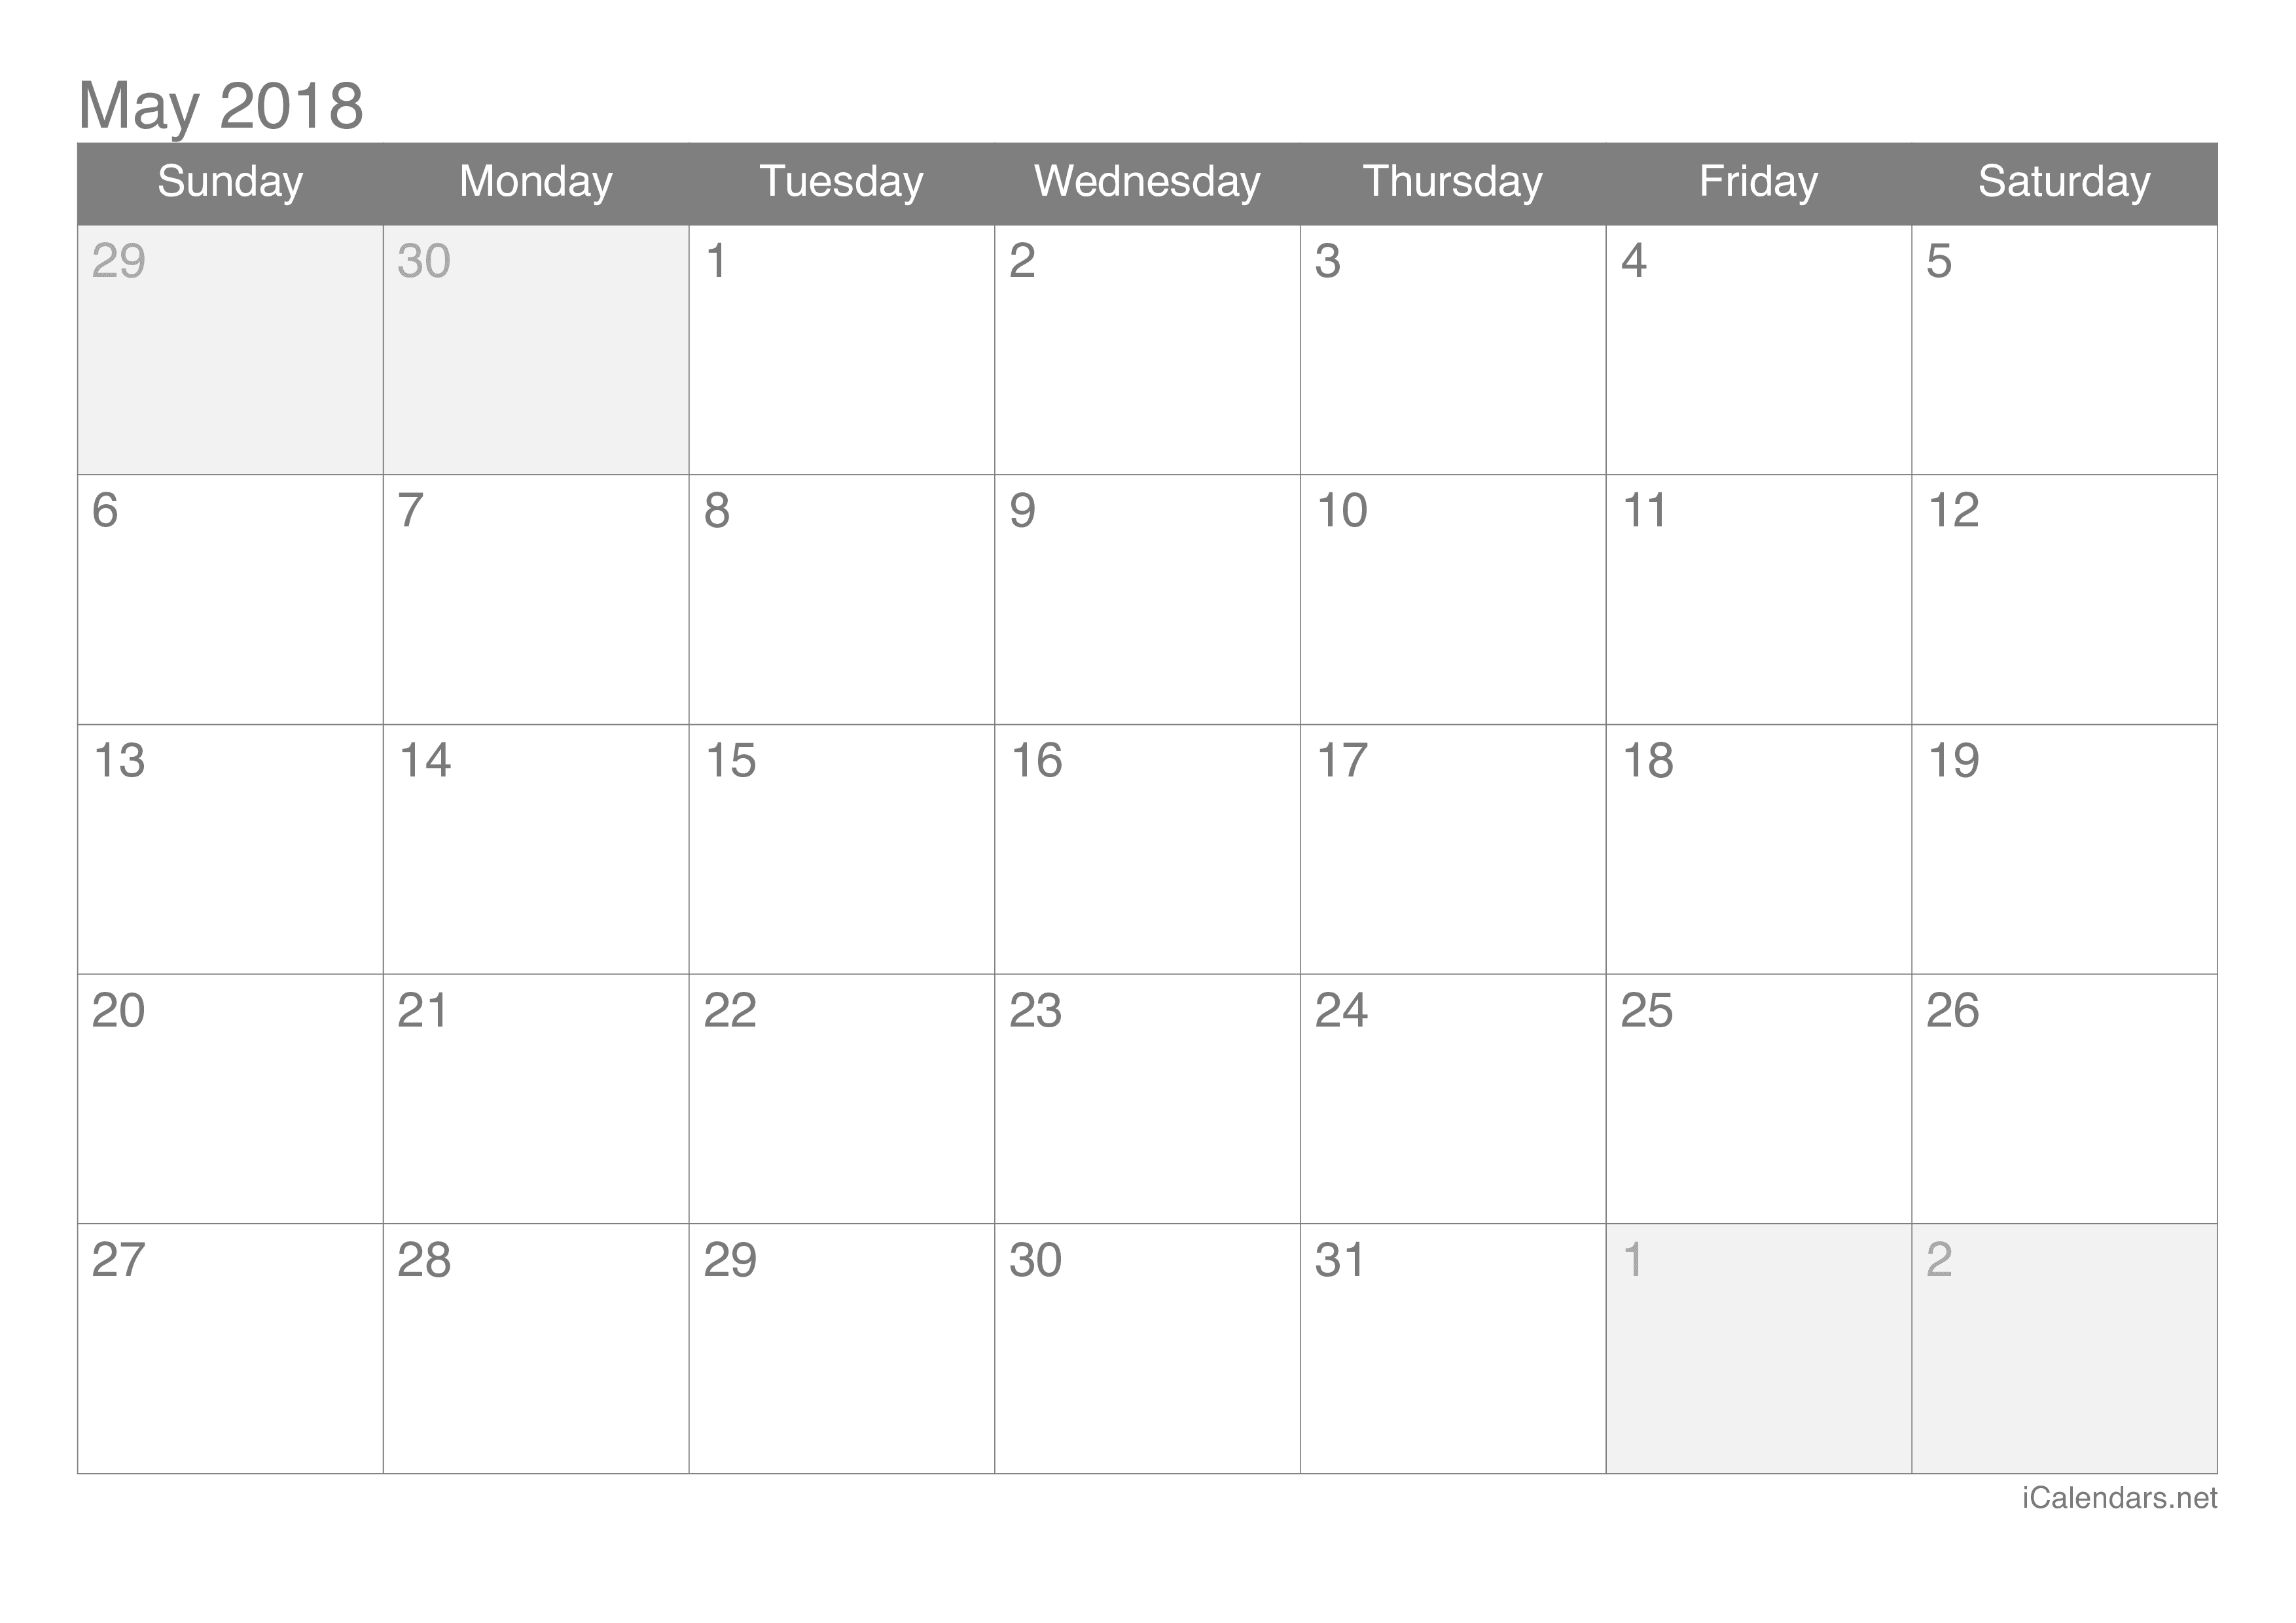 May 2018 Fillable Calendar